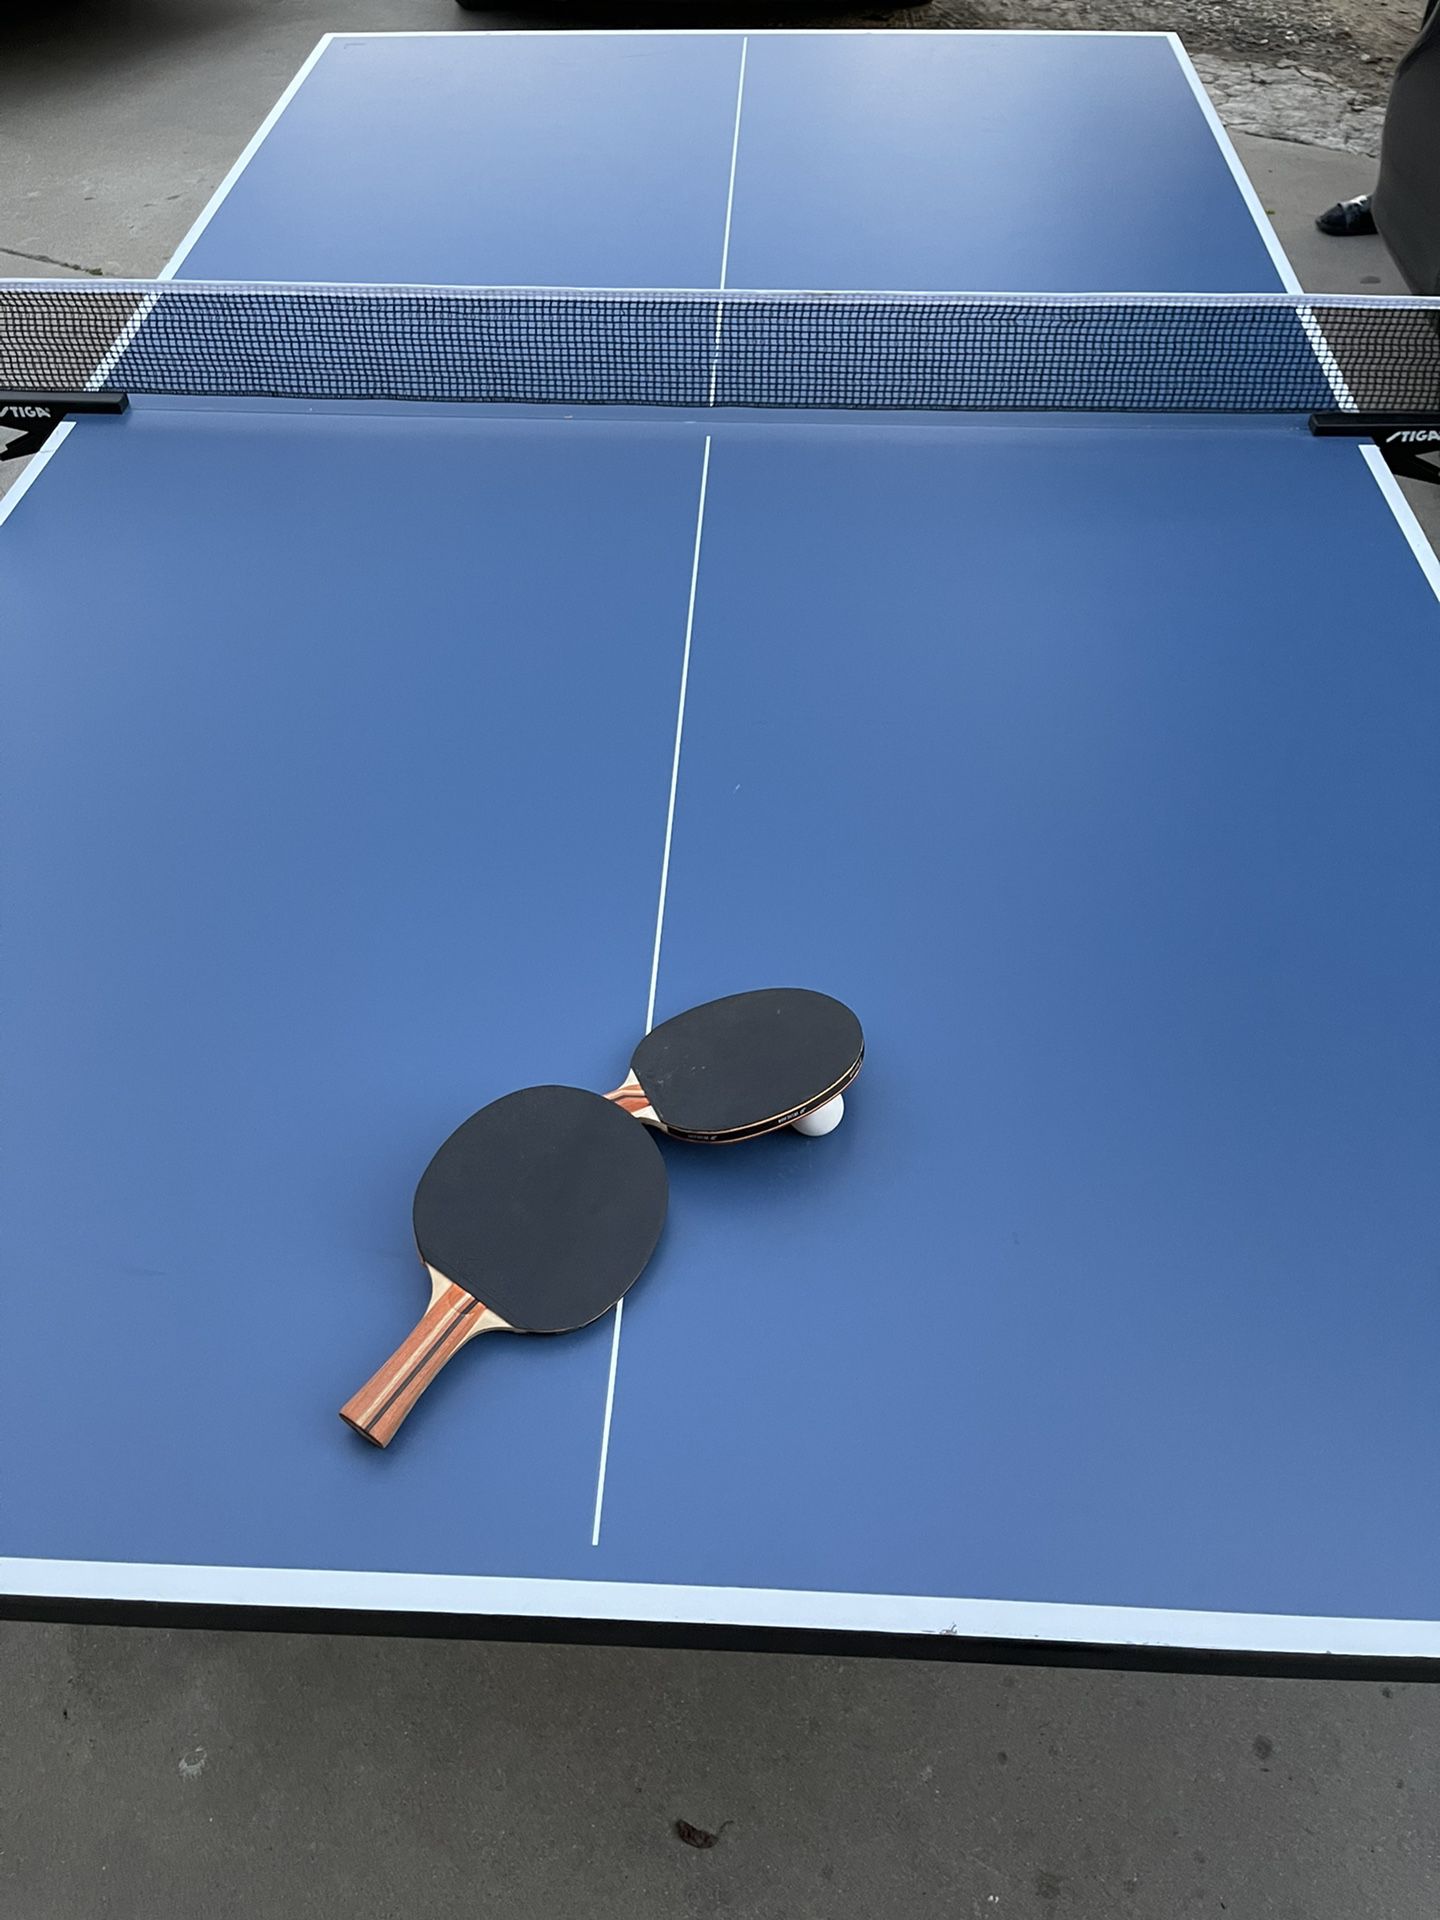 STIGA Advantage Table Tennis( Ping Pong Table) 